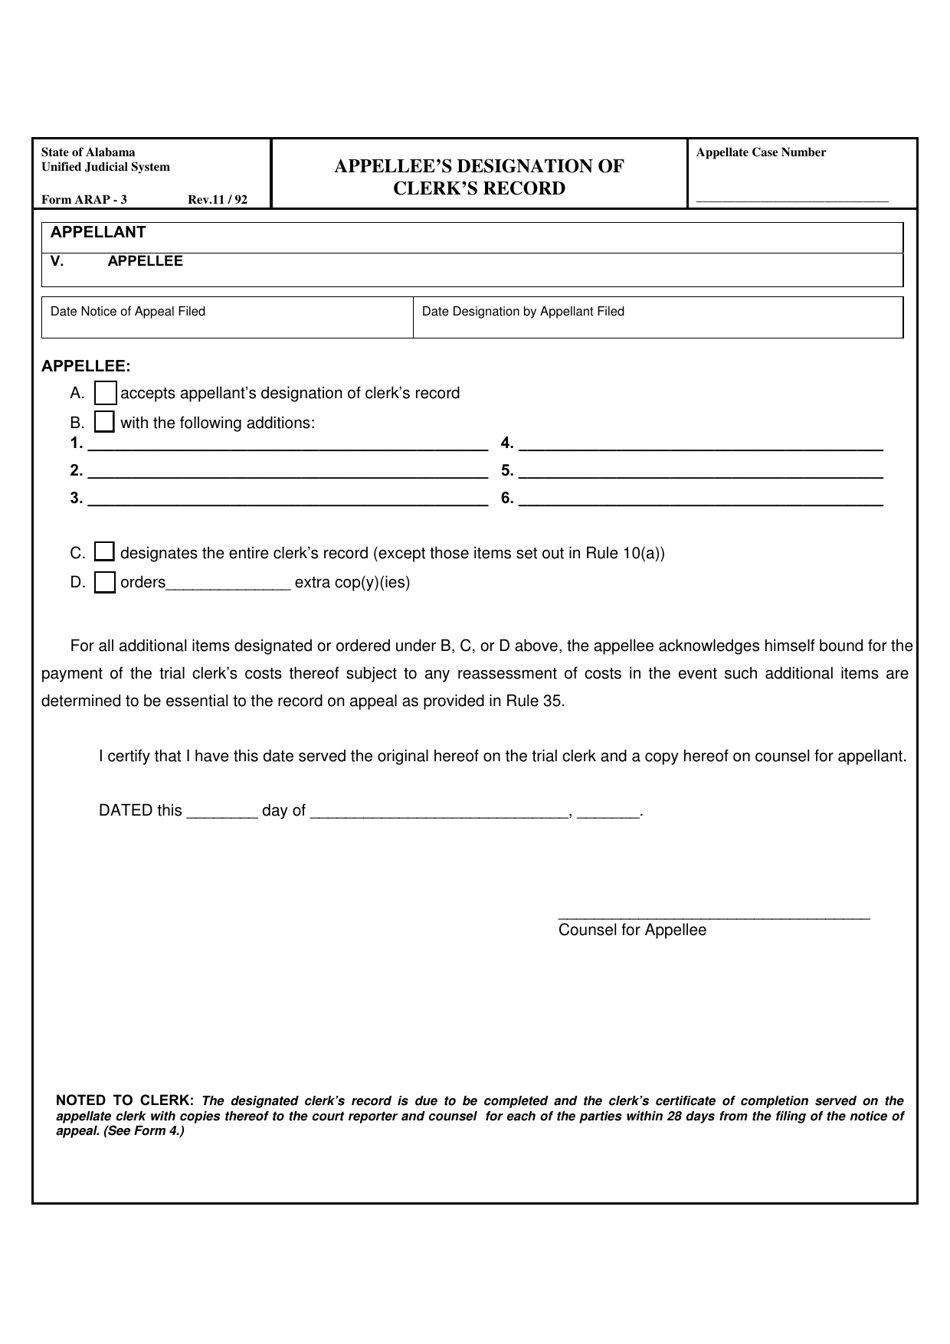 Form ARAP-3 Appellees Designation of Clerks Record - Alabama, Page 1